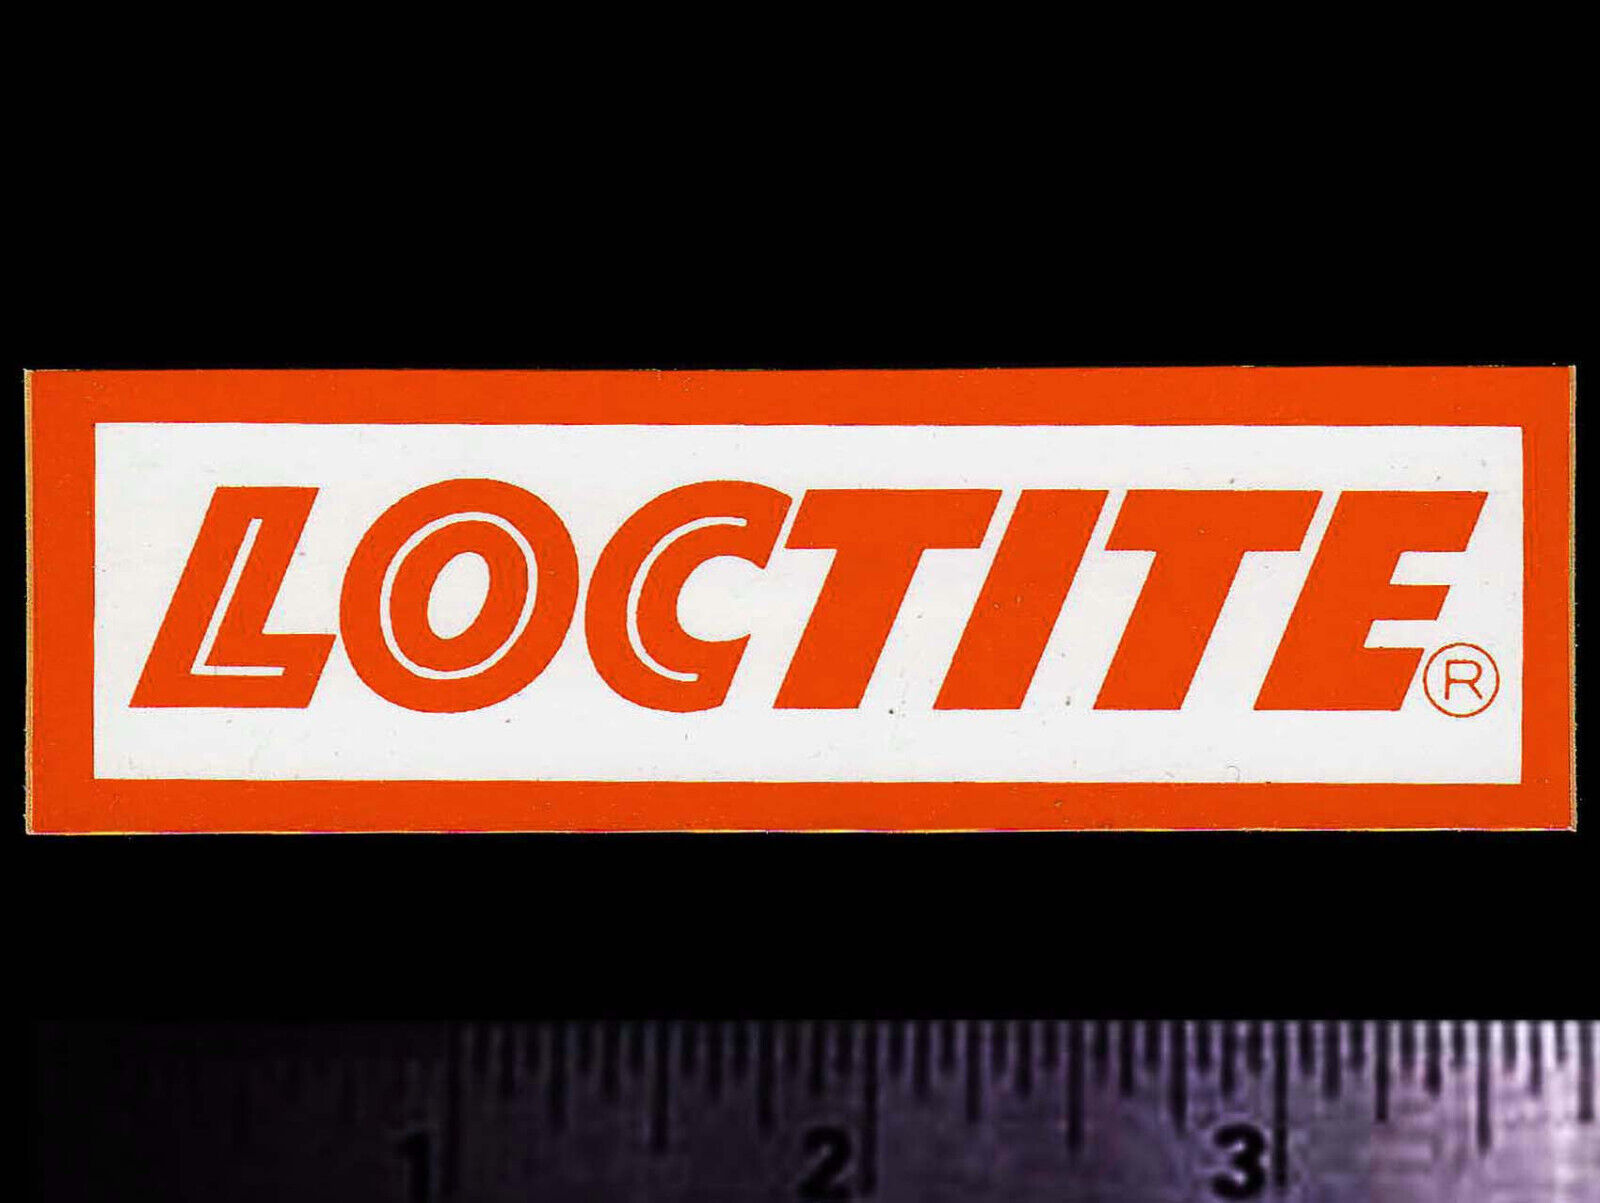 LOCTITE - Original Vintage 1960’s 70's Racing Decal/Sticker - 3.75” size